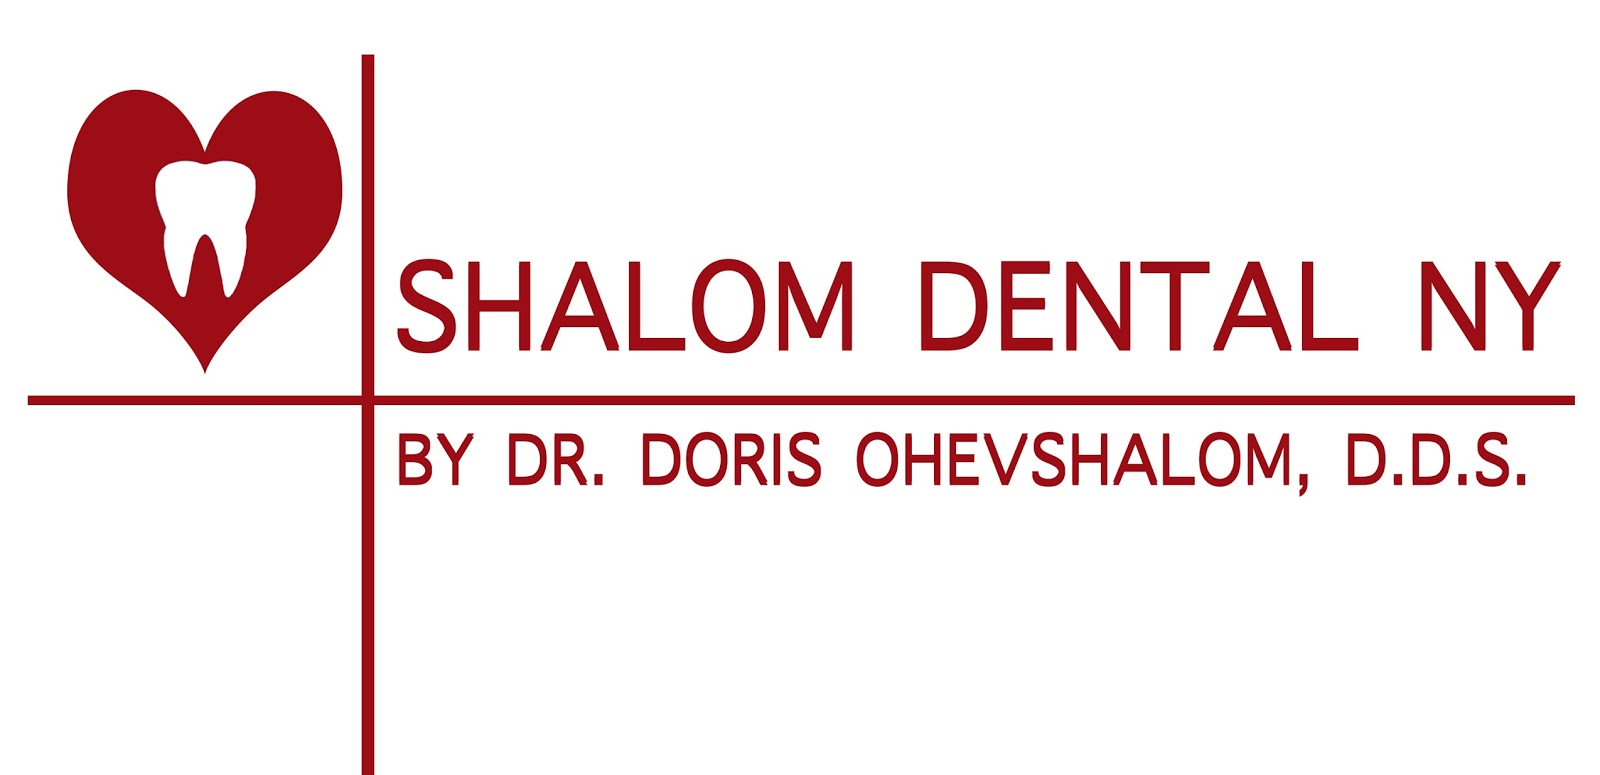 Photo of Shalom Dental NY in New York City, New York, United States - 3 Picture of Point of interest, Establishment, Health, Dentist